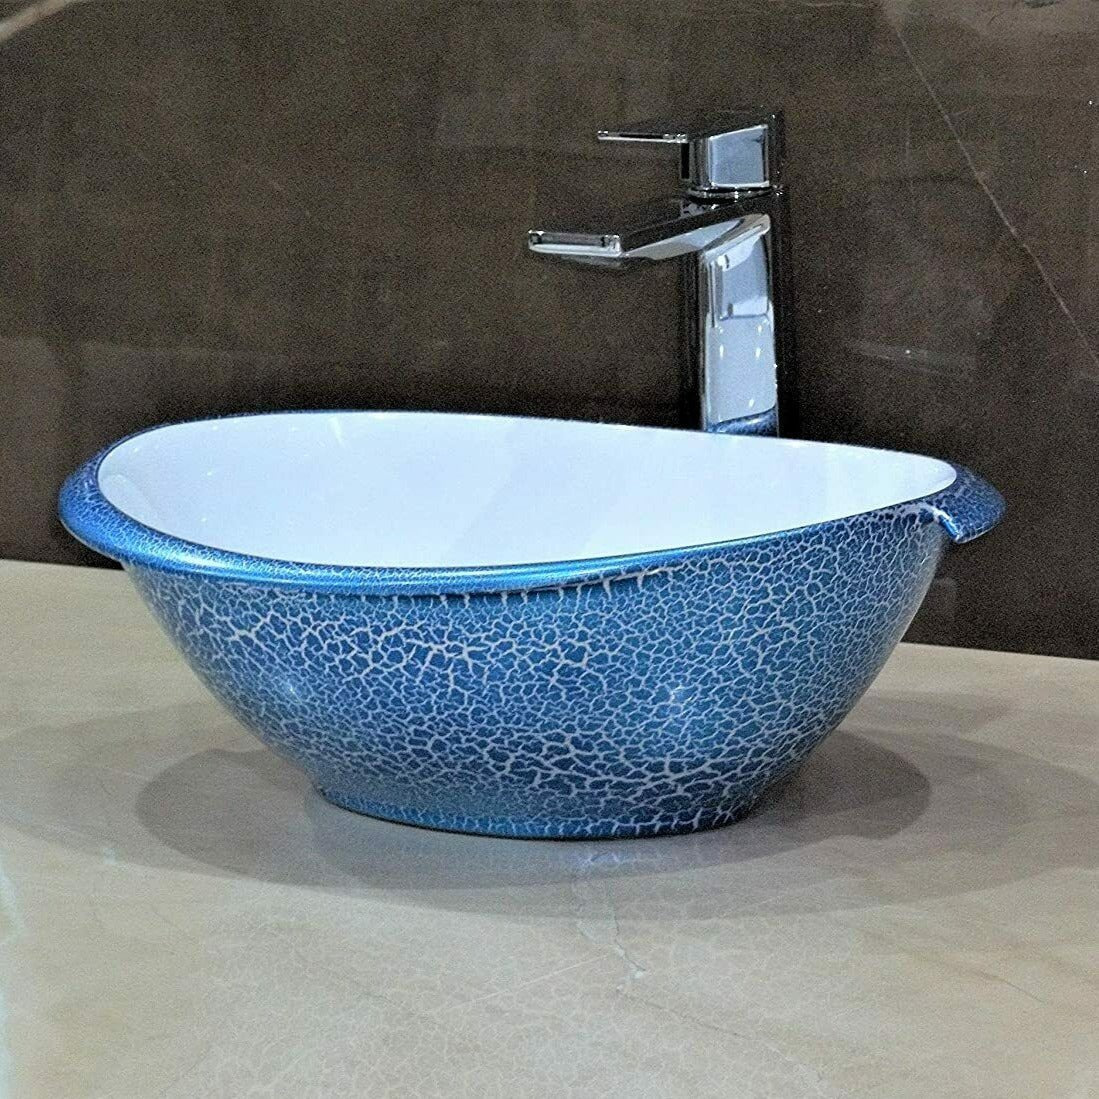 InArt Ceramic Oval Shape Above Counter Top Wash Basin Bathroom Porcelain Vessel Sink Bowl For Lavatory/Bathroom 41 x 32 x 14 Cm (Blue White) - InArt-Studio-USA